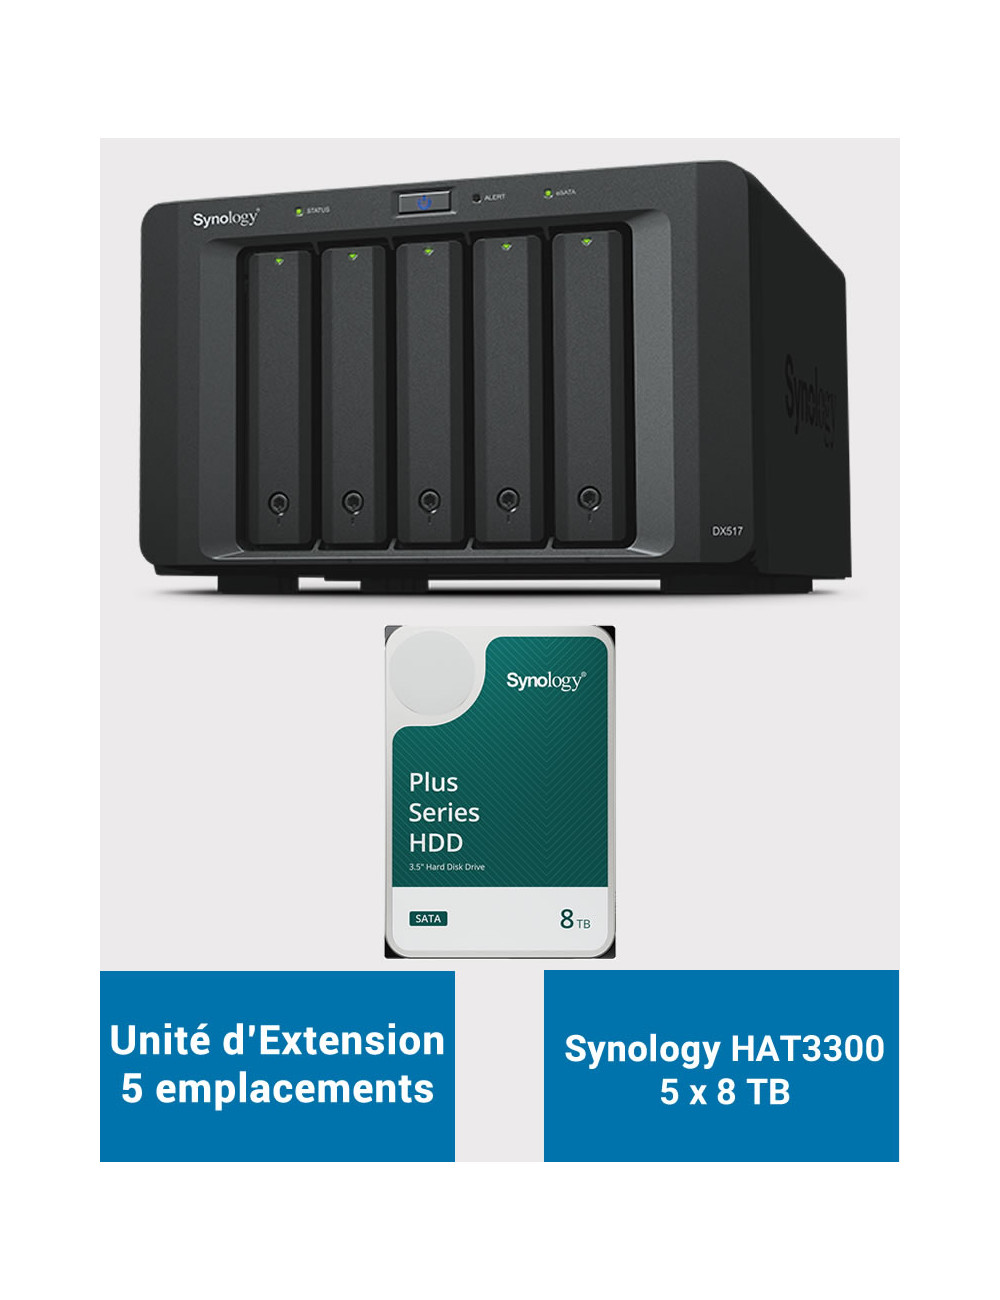 Synology DX517 Unidad de expansión HAT3300 40TB (5x8TB)